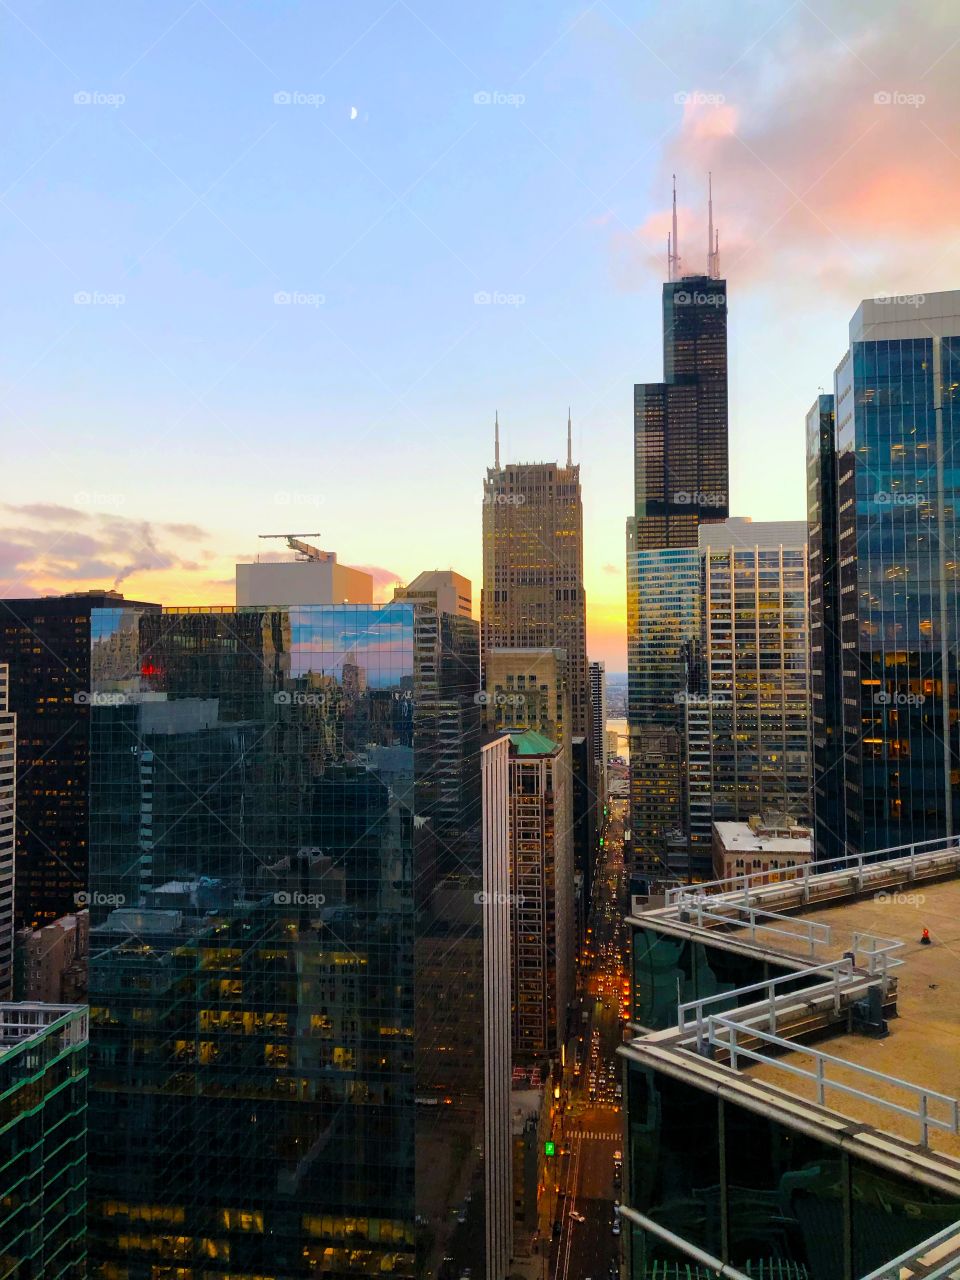 Chicago sunset 